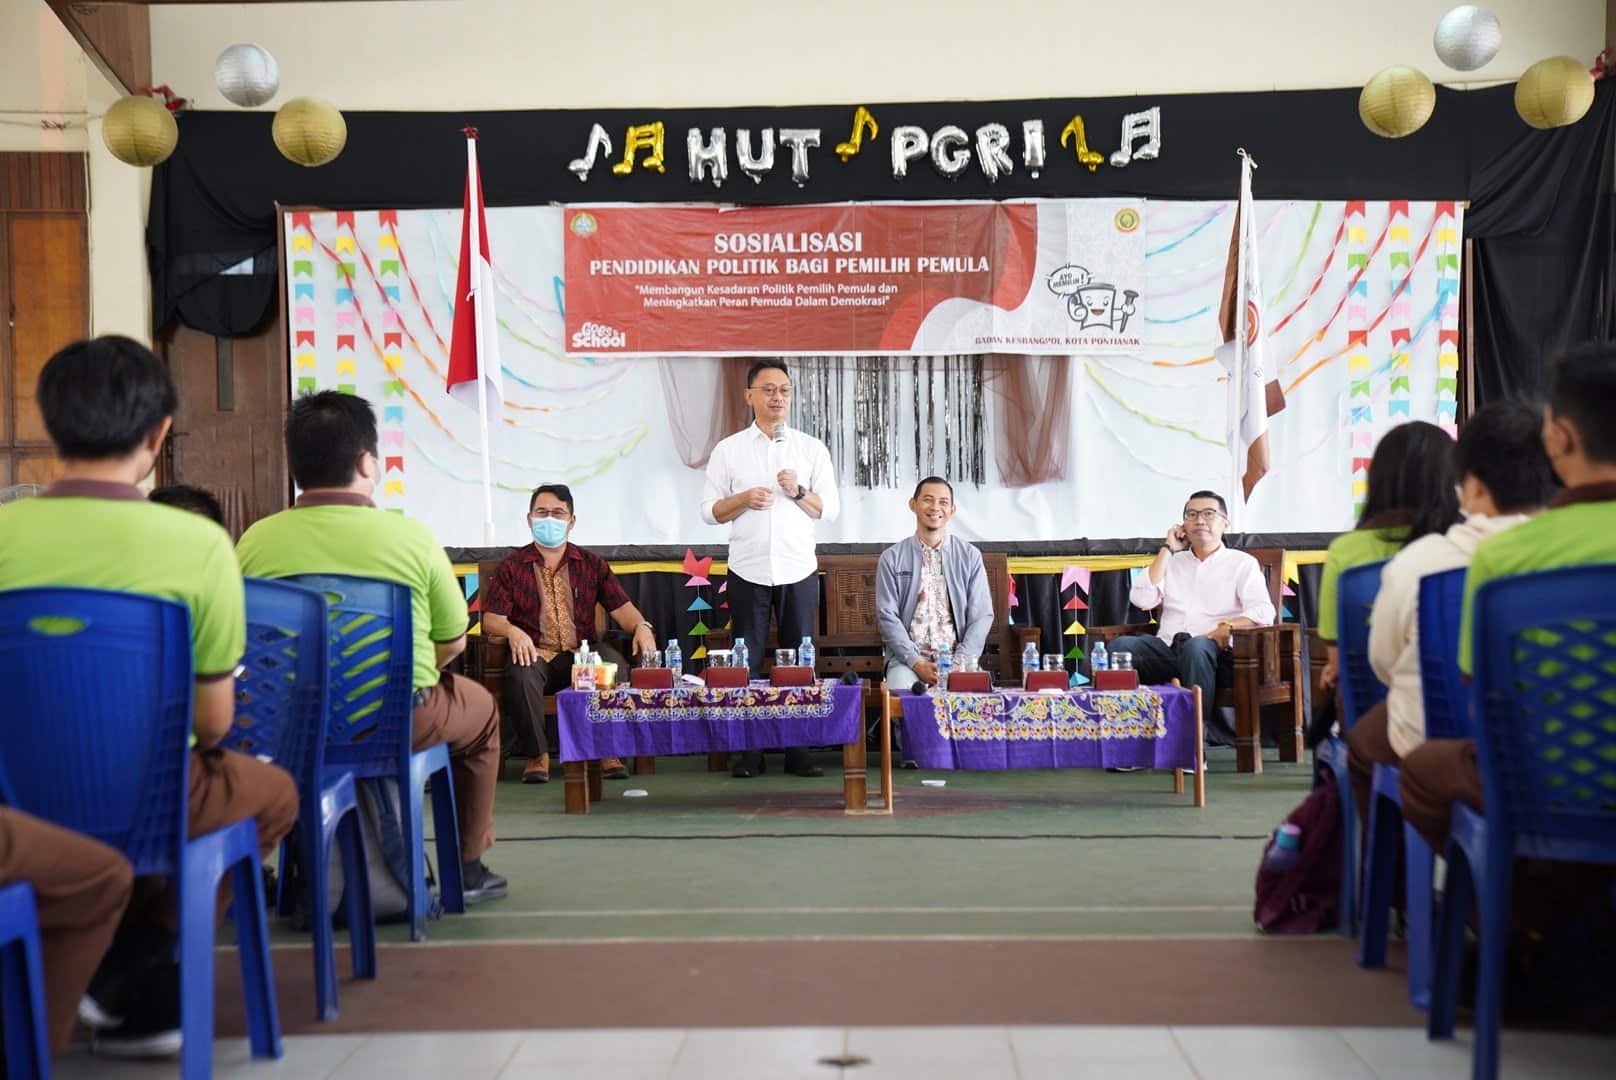 Wali Kota Pontianak, Edi Rusdi Kamtono menyampaikan sosialisasi pendidikan politik pemilih pemula di SMA Gembala Baik. (Prokopim For KalbarOnline.com)